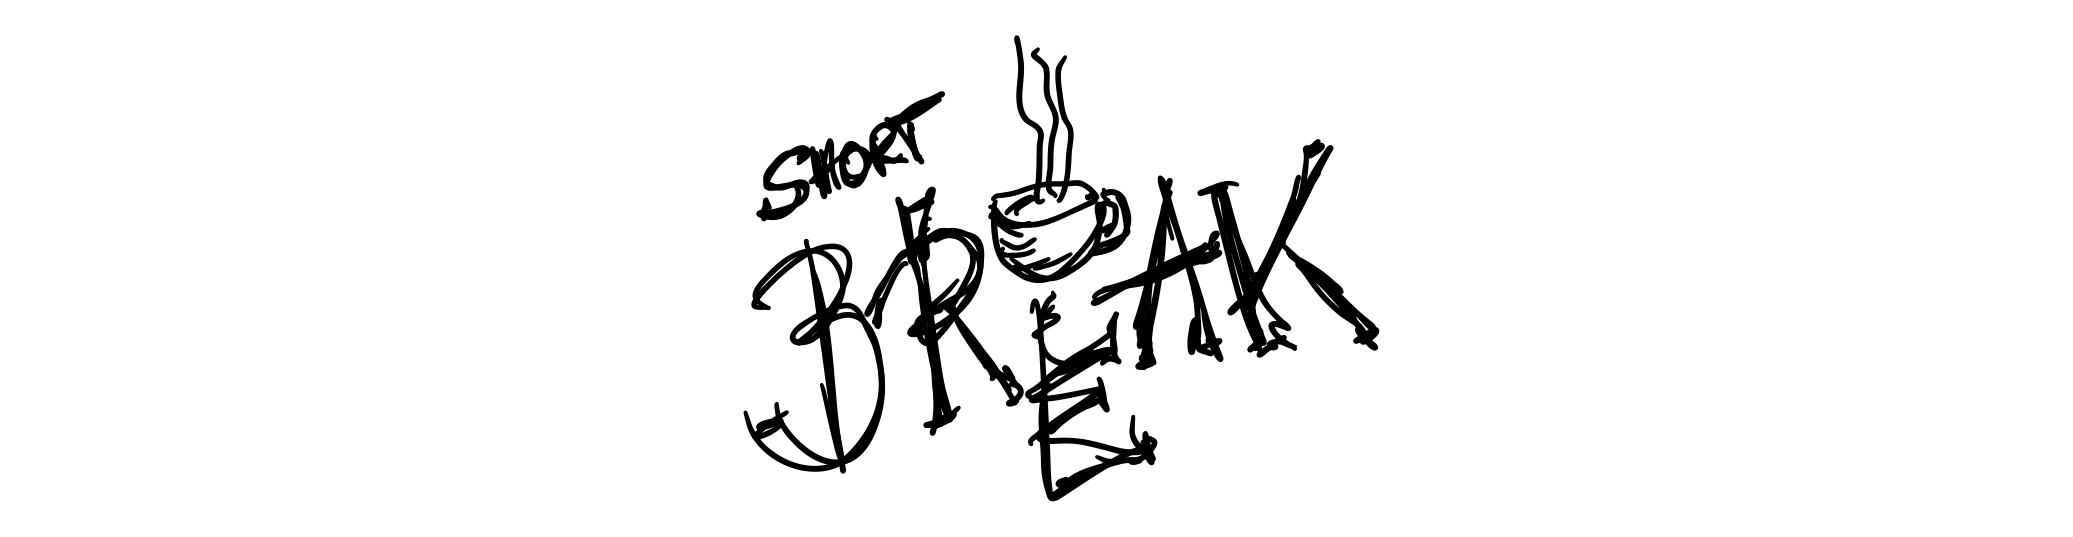 Short Break 42thinking